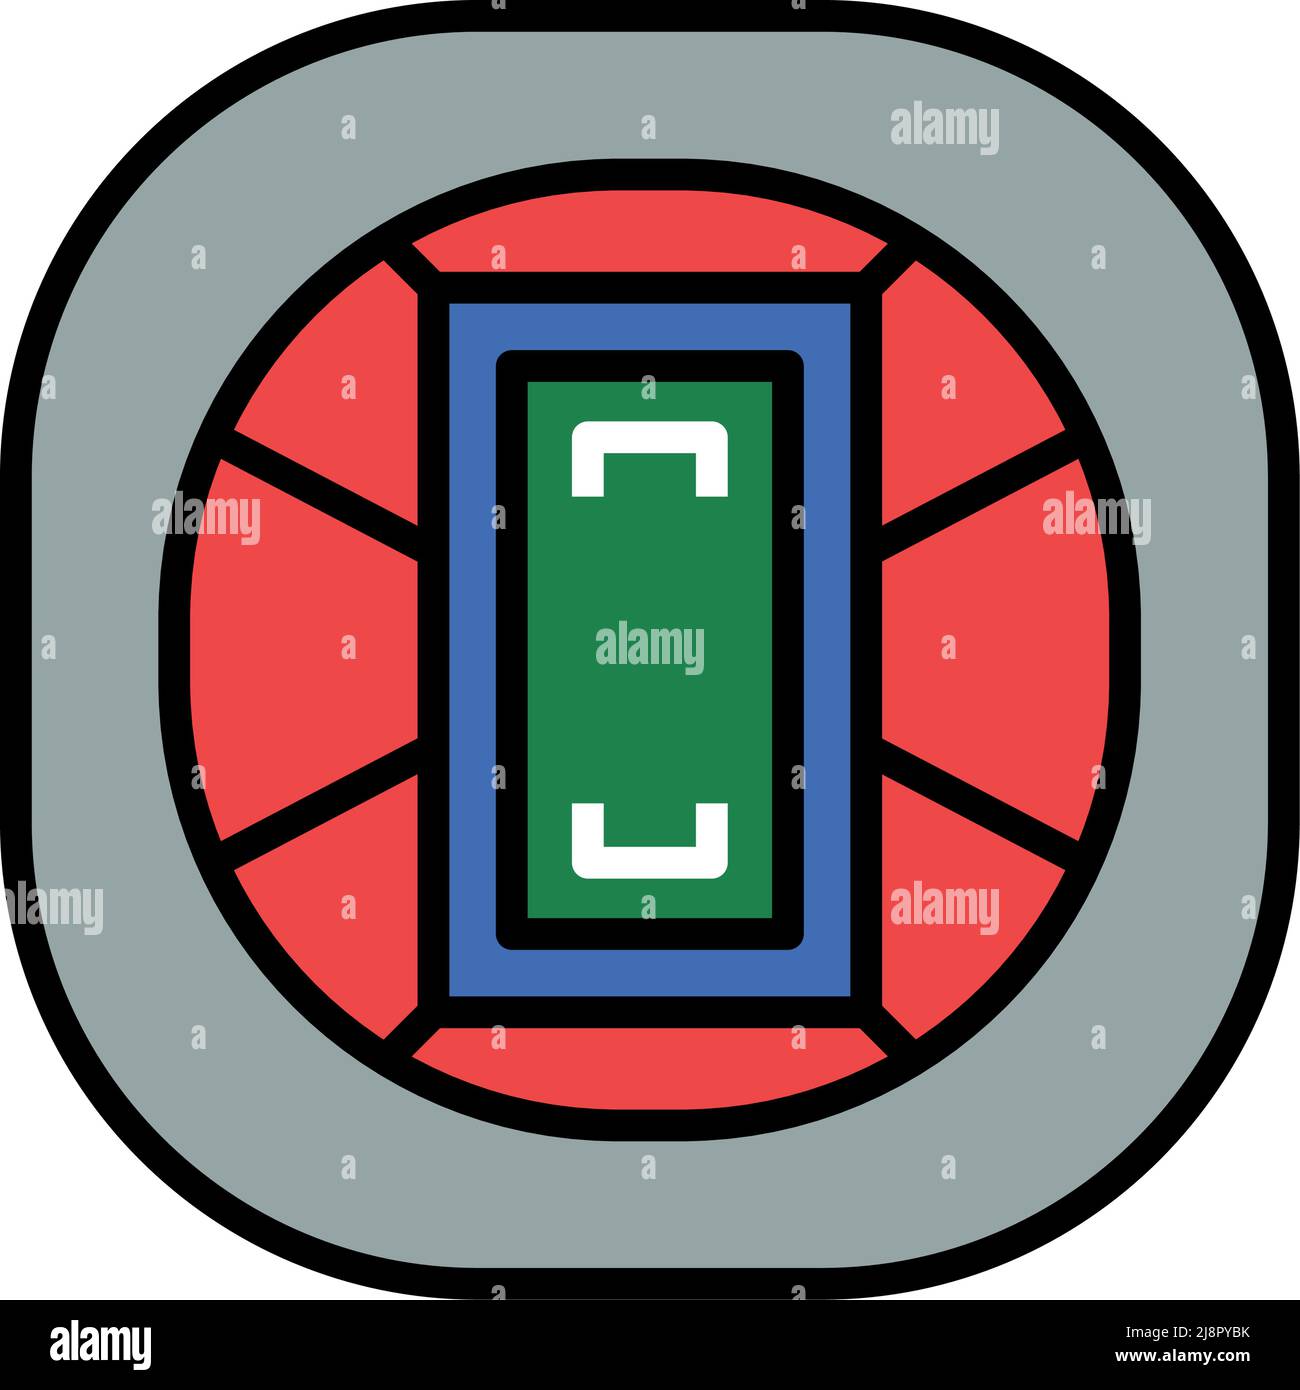 American Football Stadium Bird's-eye View Icon. Editable Bold Outline With Color Fill Design. Vector Illustration. Stock Vector